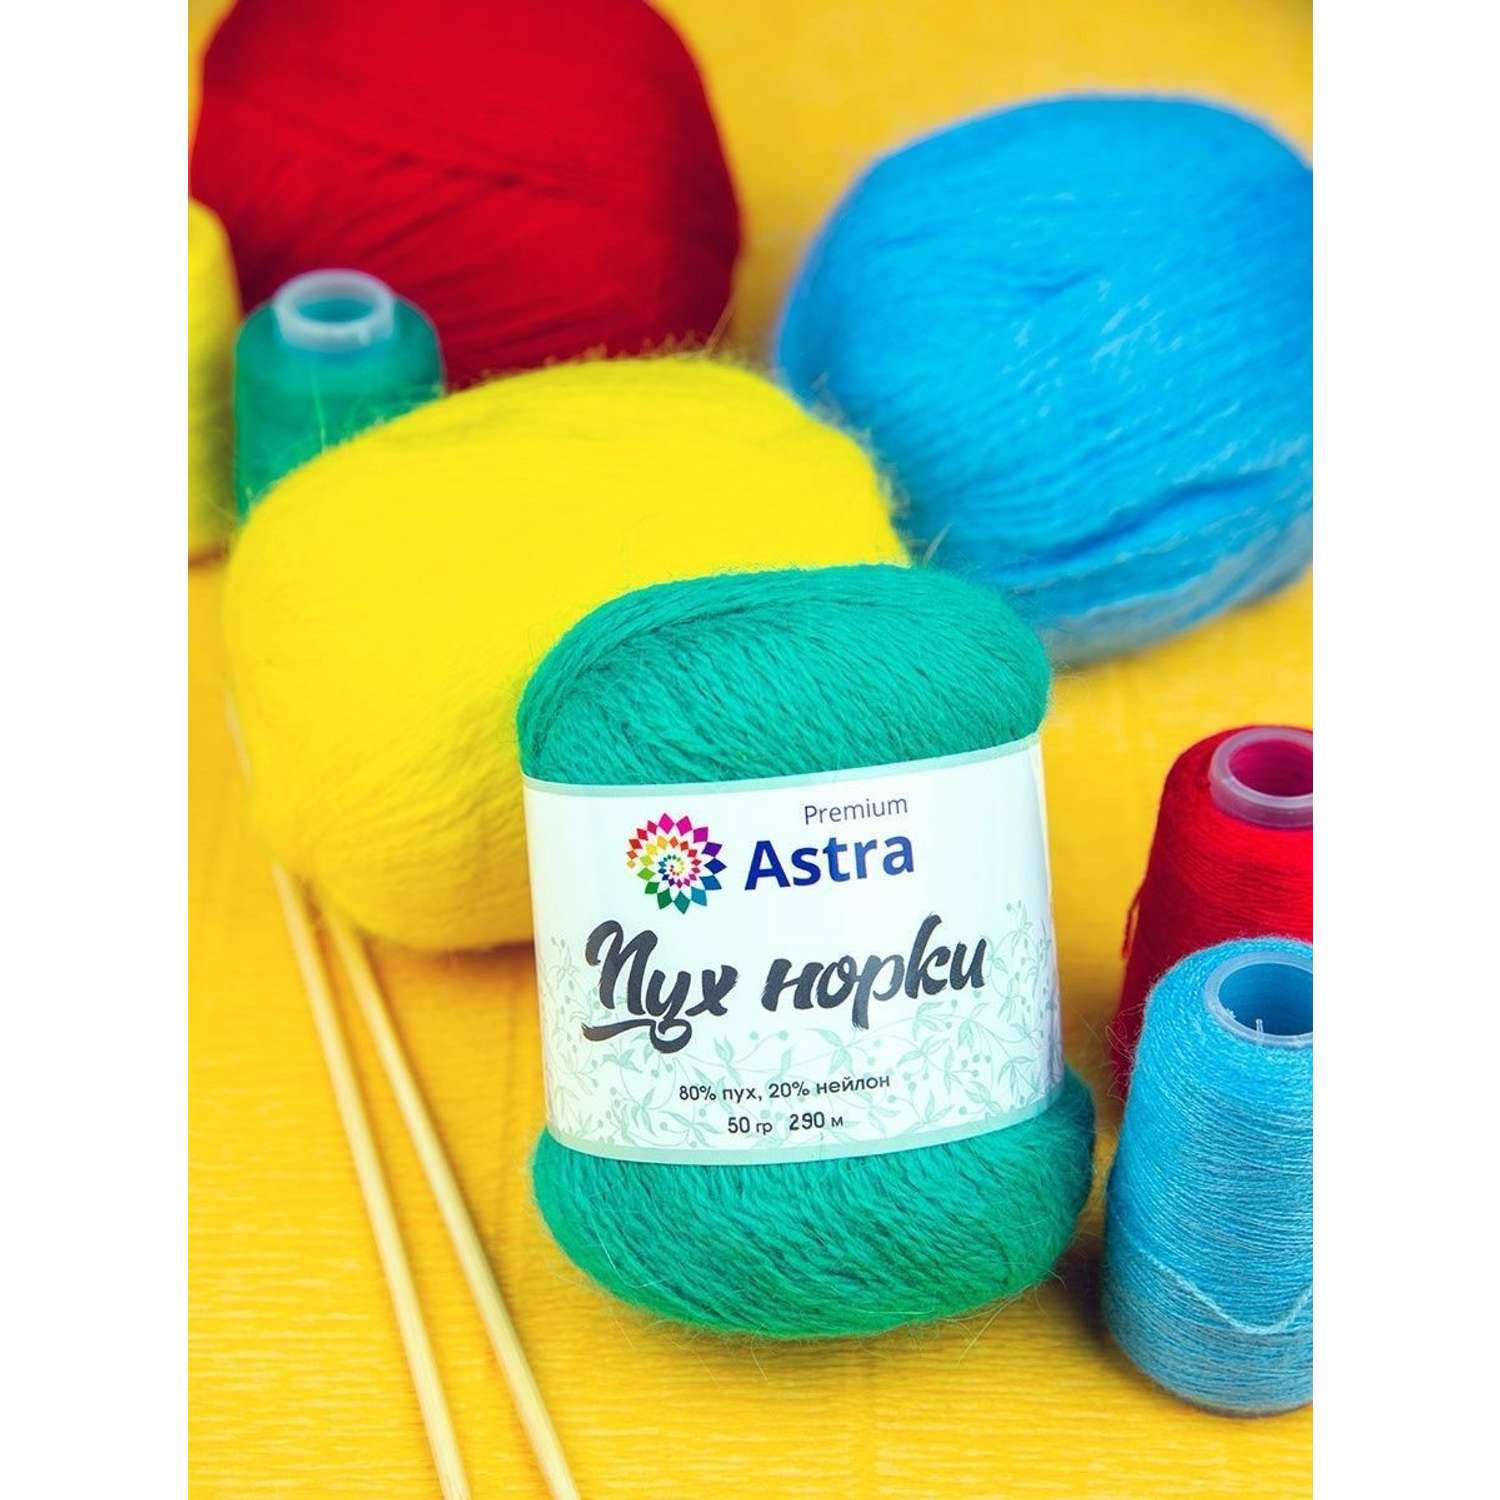 Пряжа Astra Premium Пух норки Mink yarn воздушная с ворсом 50 г 290 м 064 серо-голубой 1 моток - фото 11